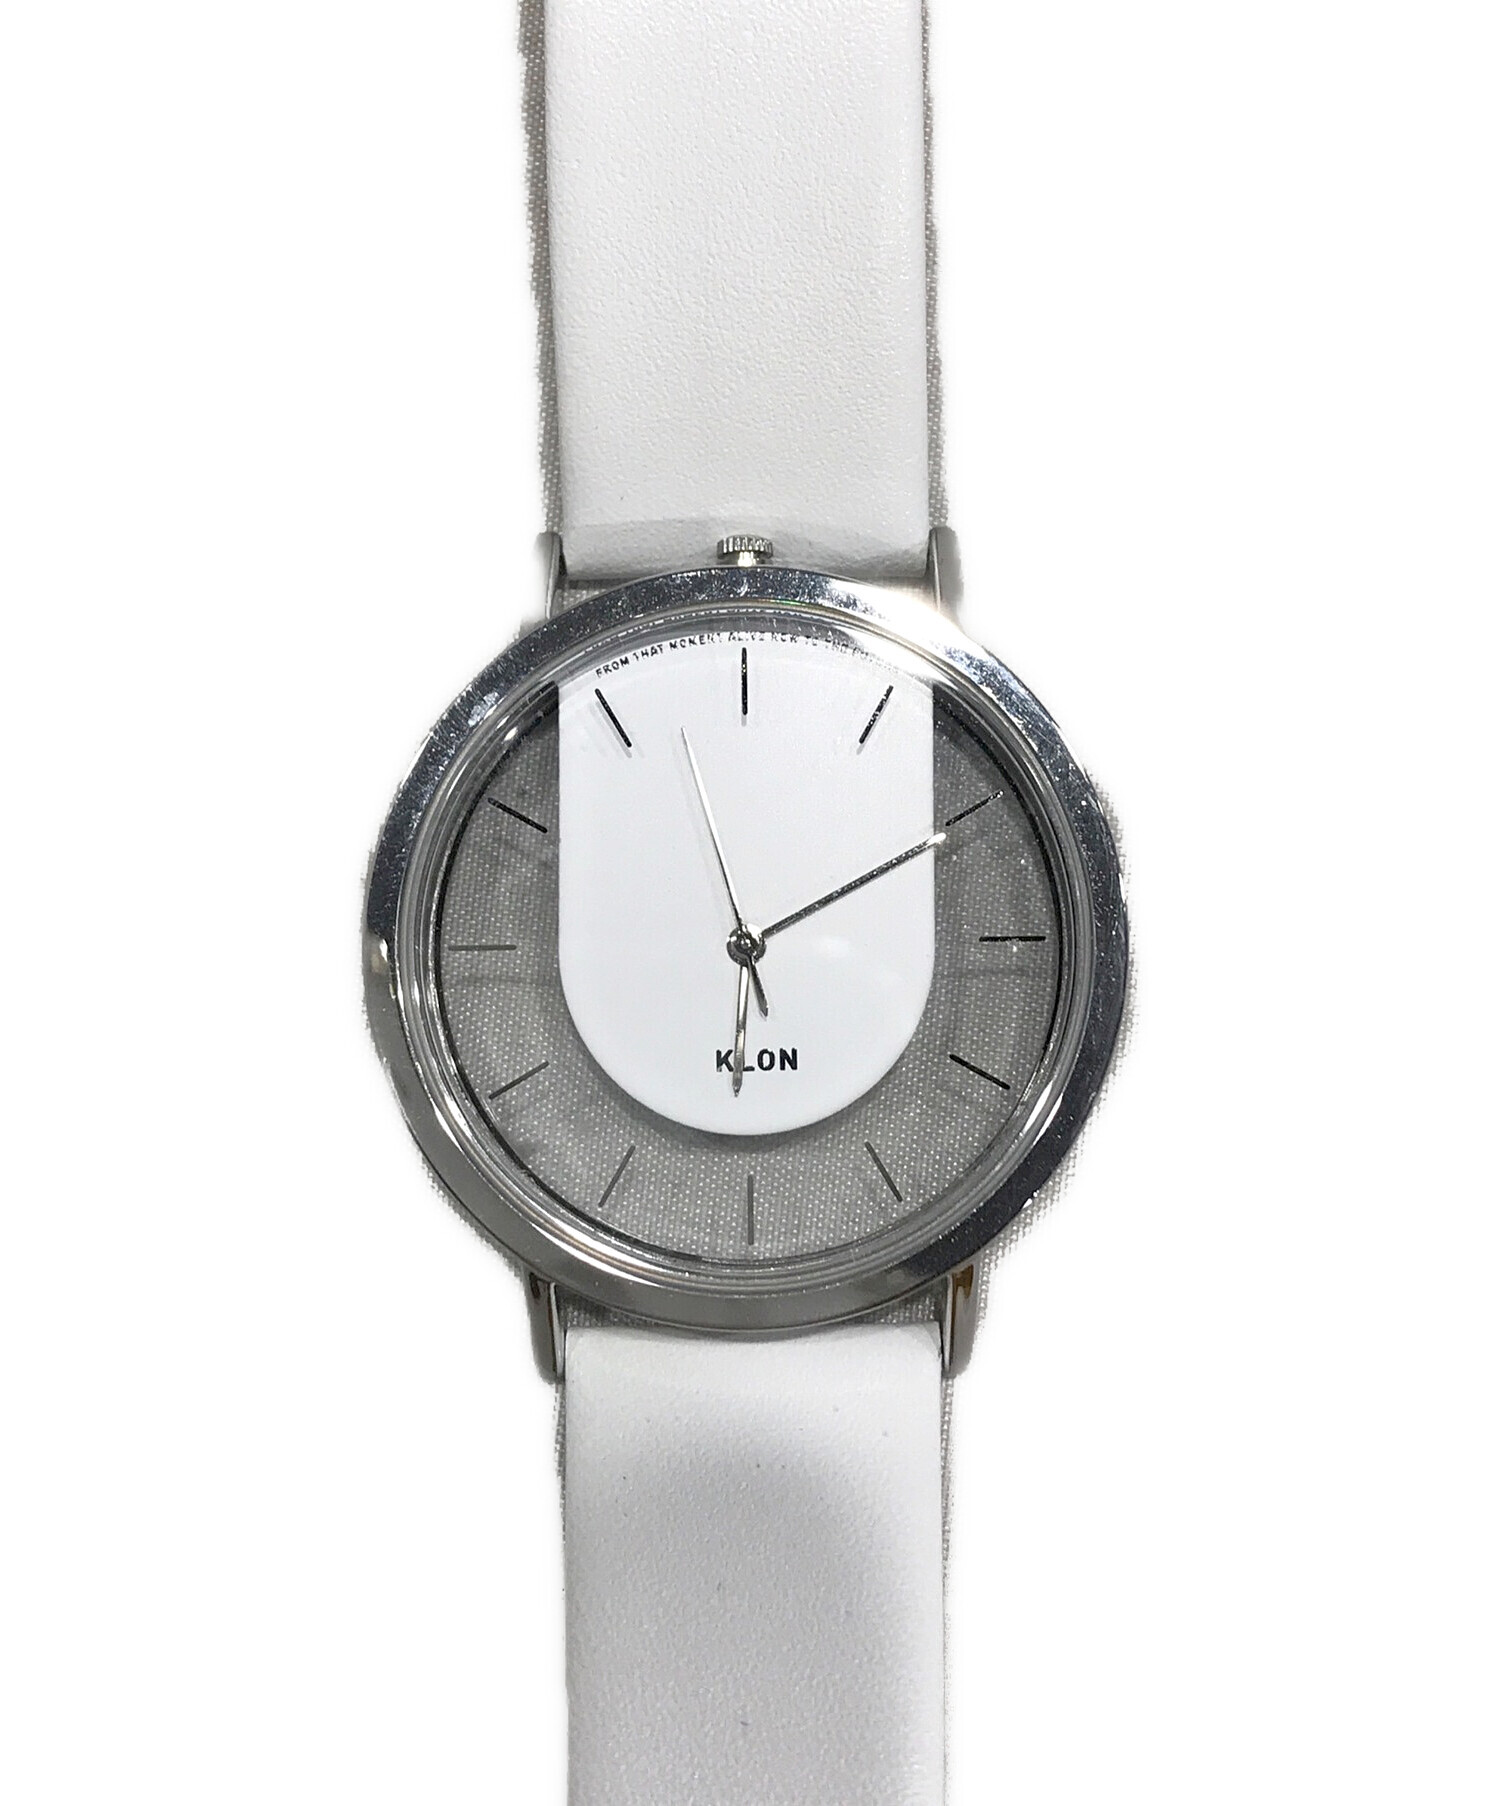 KLON (クローン) INVISIBLE RELATION 40mm腕時計